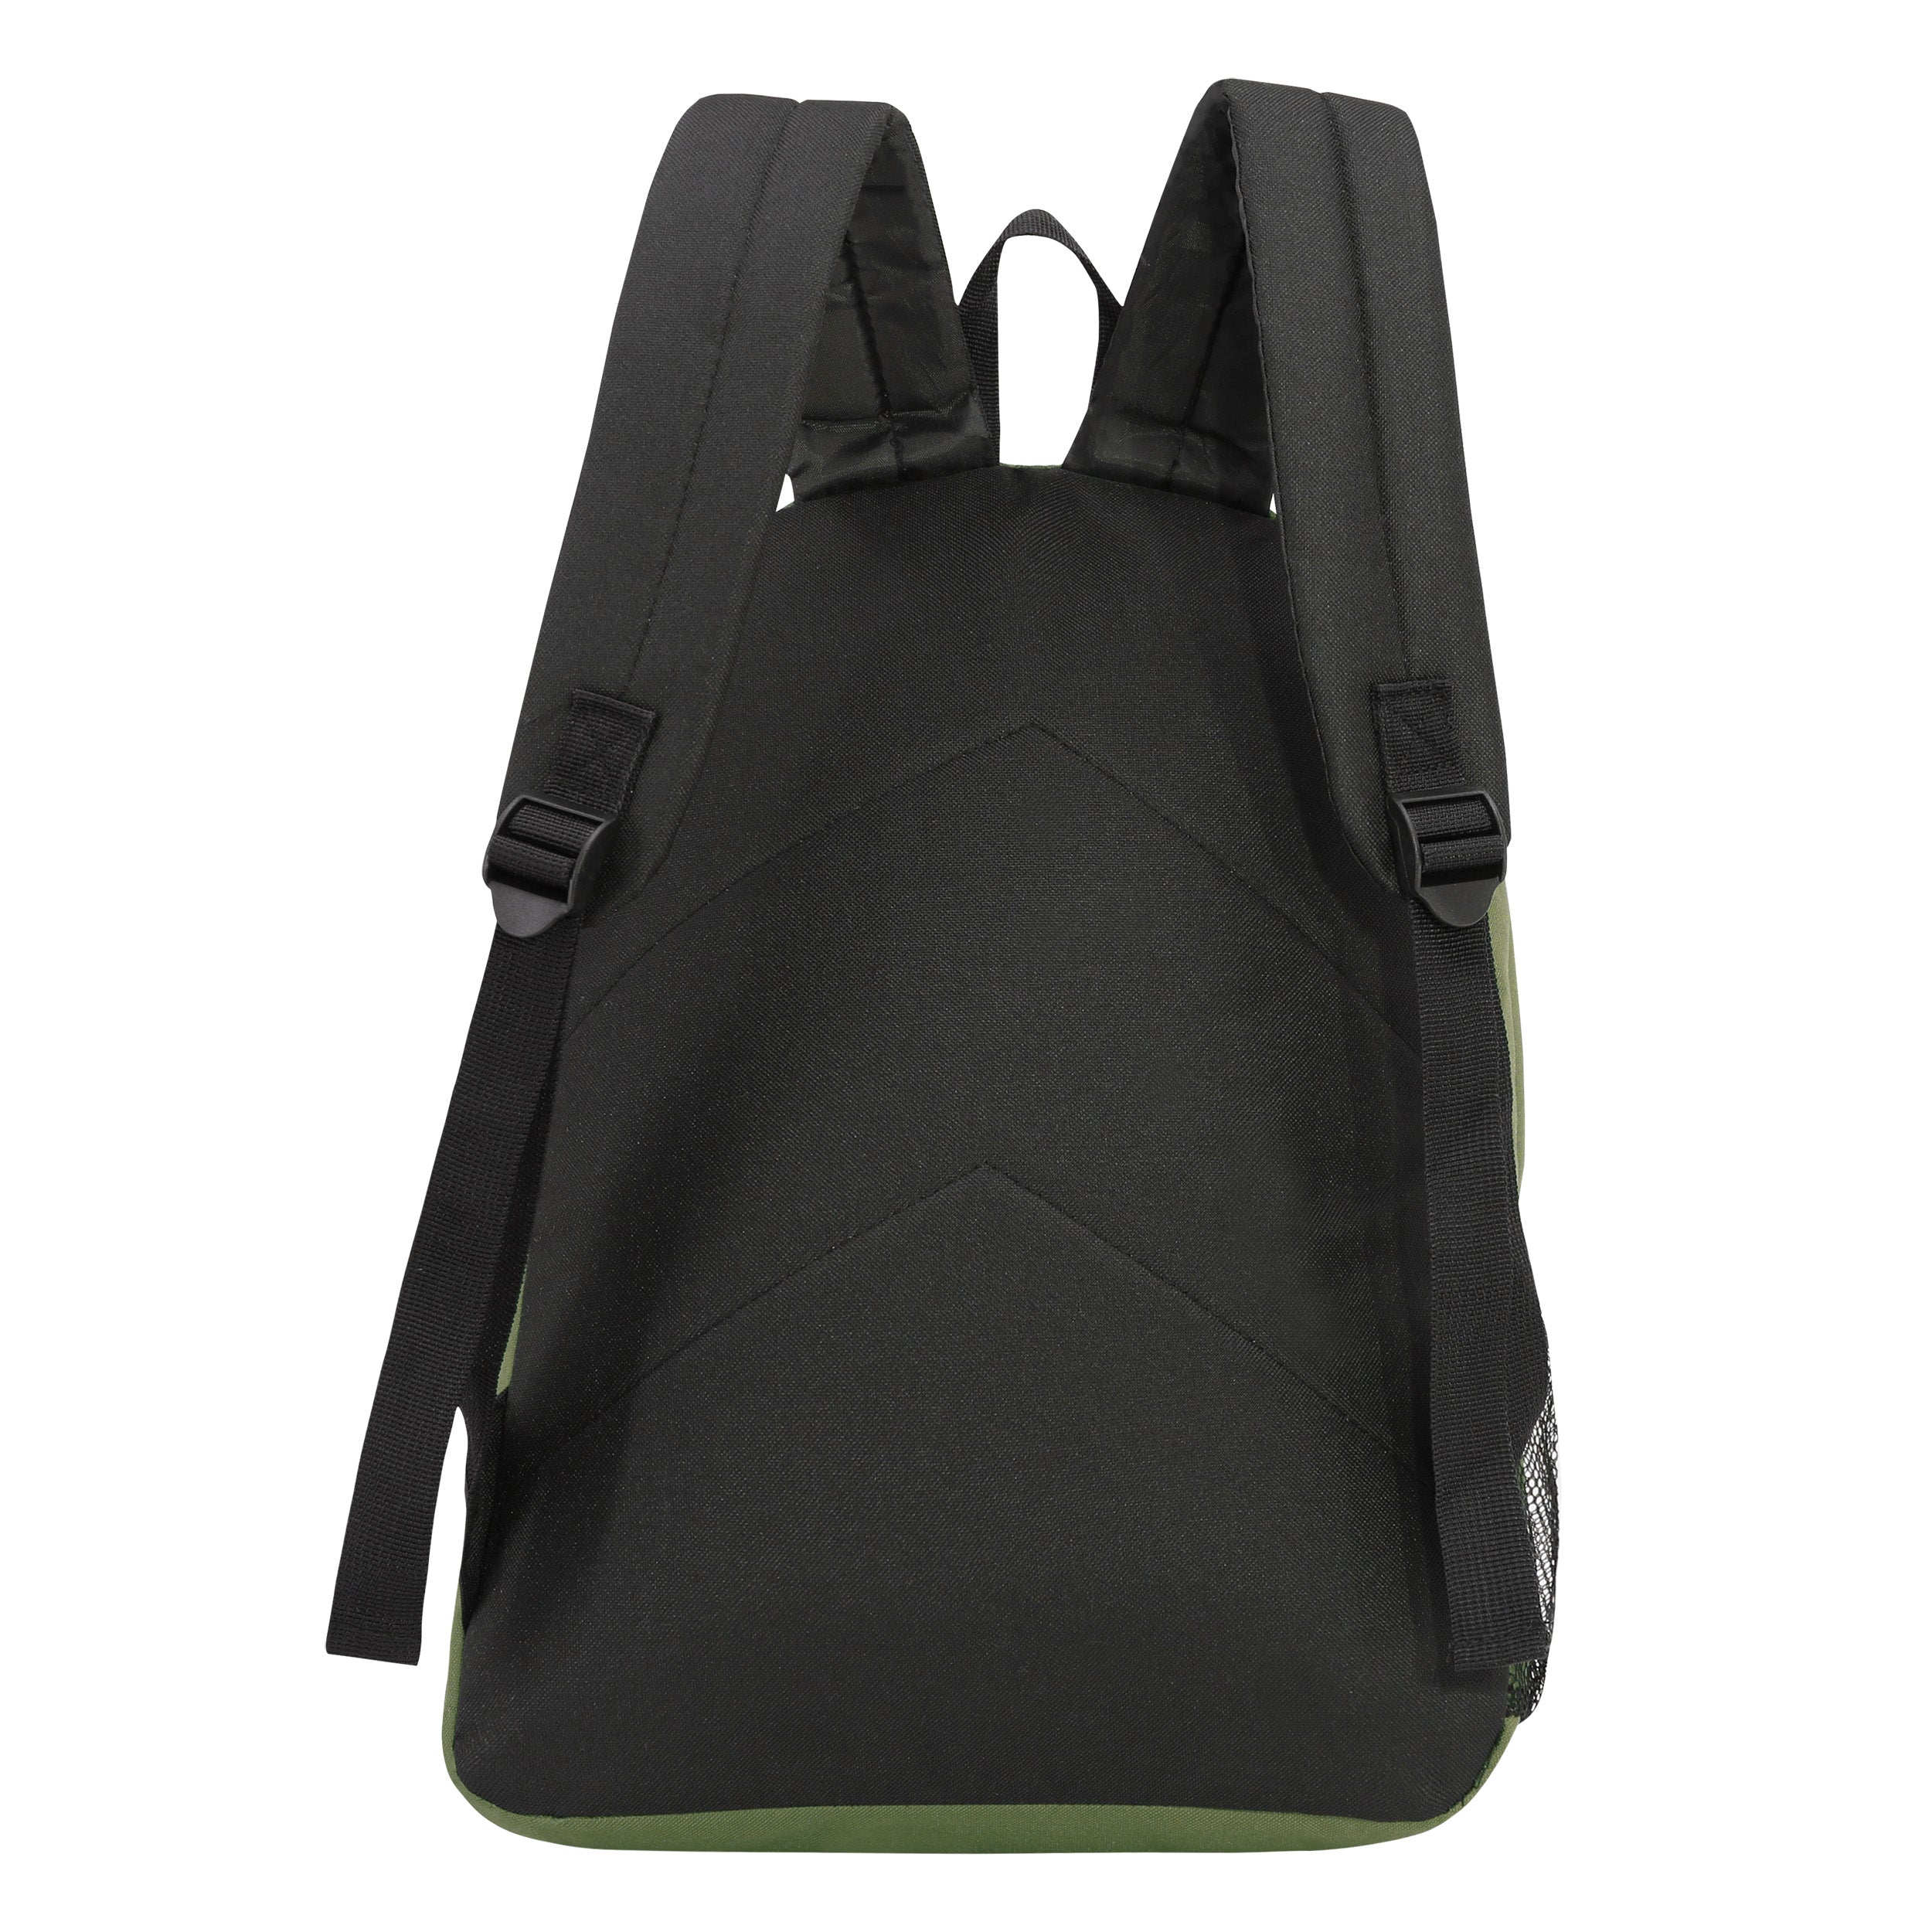 17" Bulk Classic Olive Backpack - Wholesale Case of 24 Bookbags